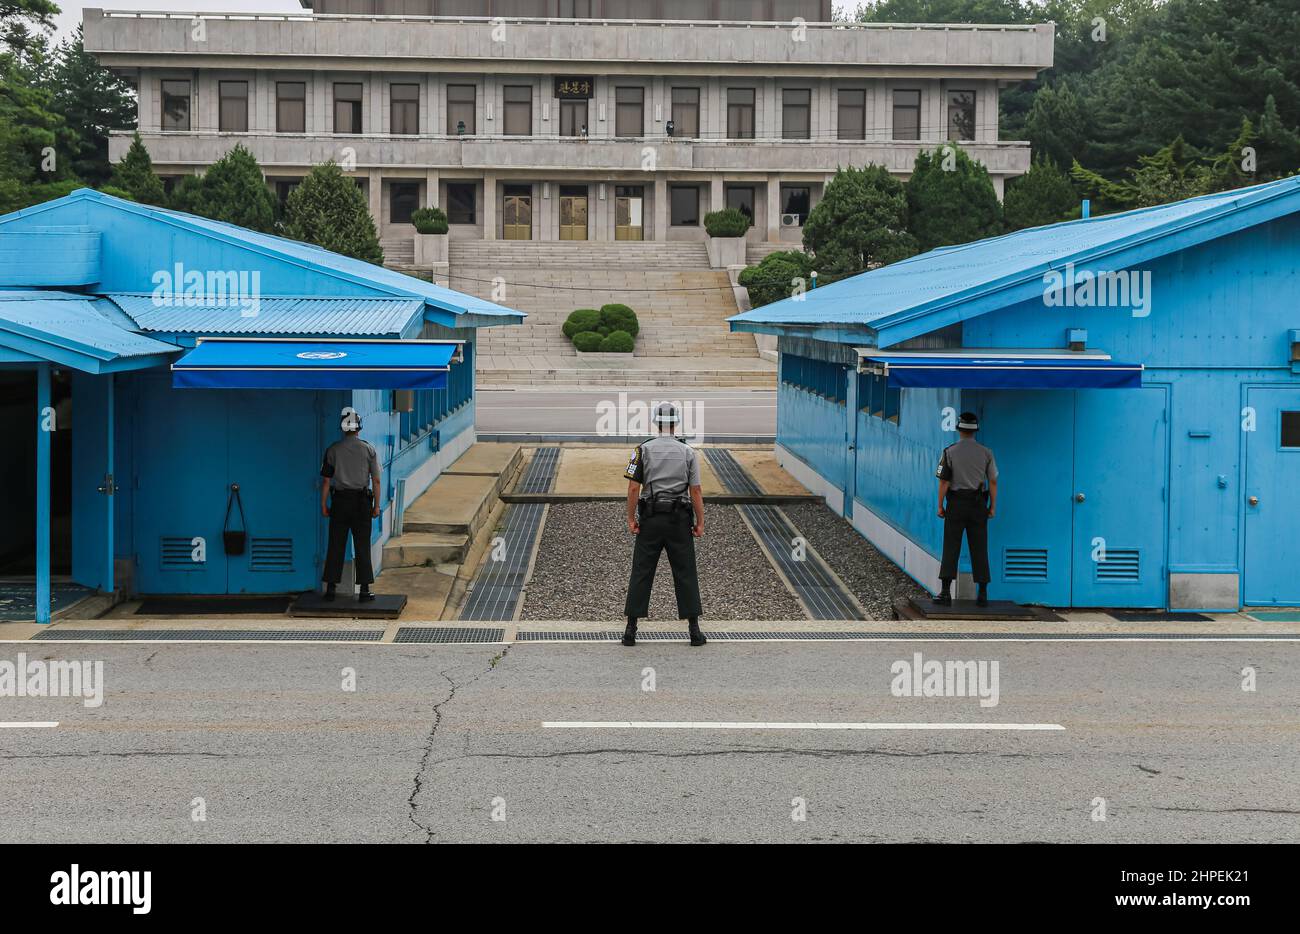 Panmunjom, Corea del Sur - 28 de julio de 2020: La zona desmilitarizada o zona desmilitarizada entre los dos países coreanos. Cruzando la Península Coreana cerca de la 3 Foto de stock